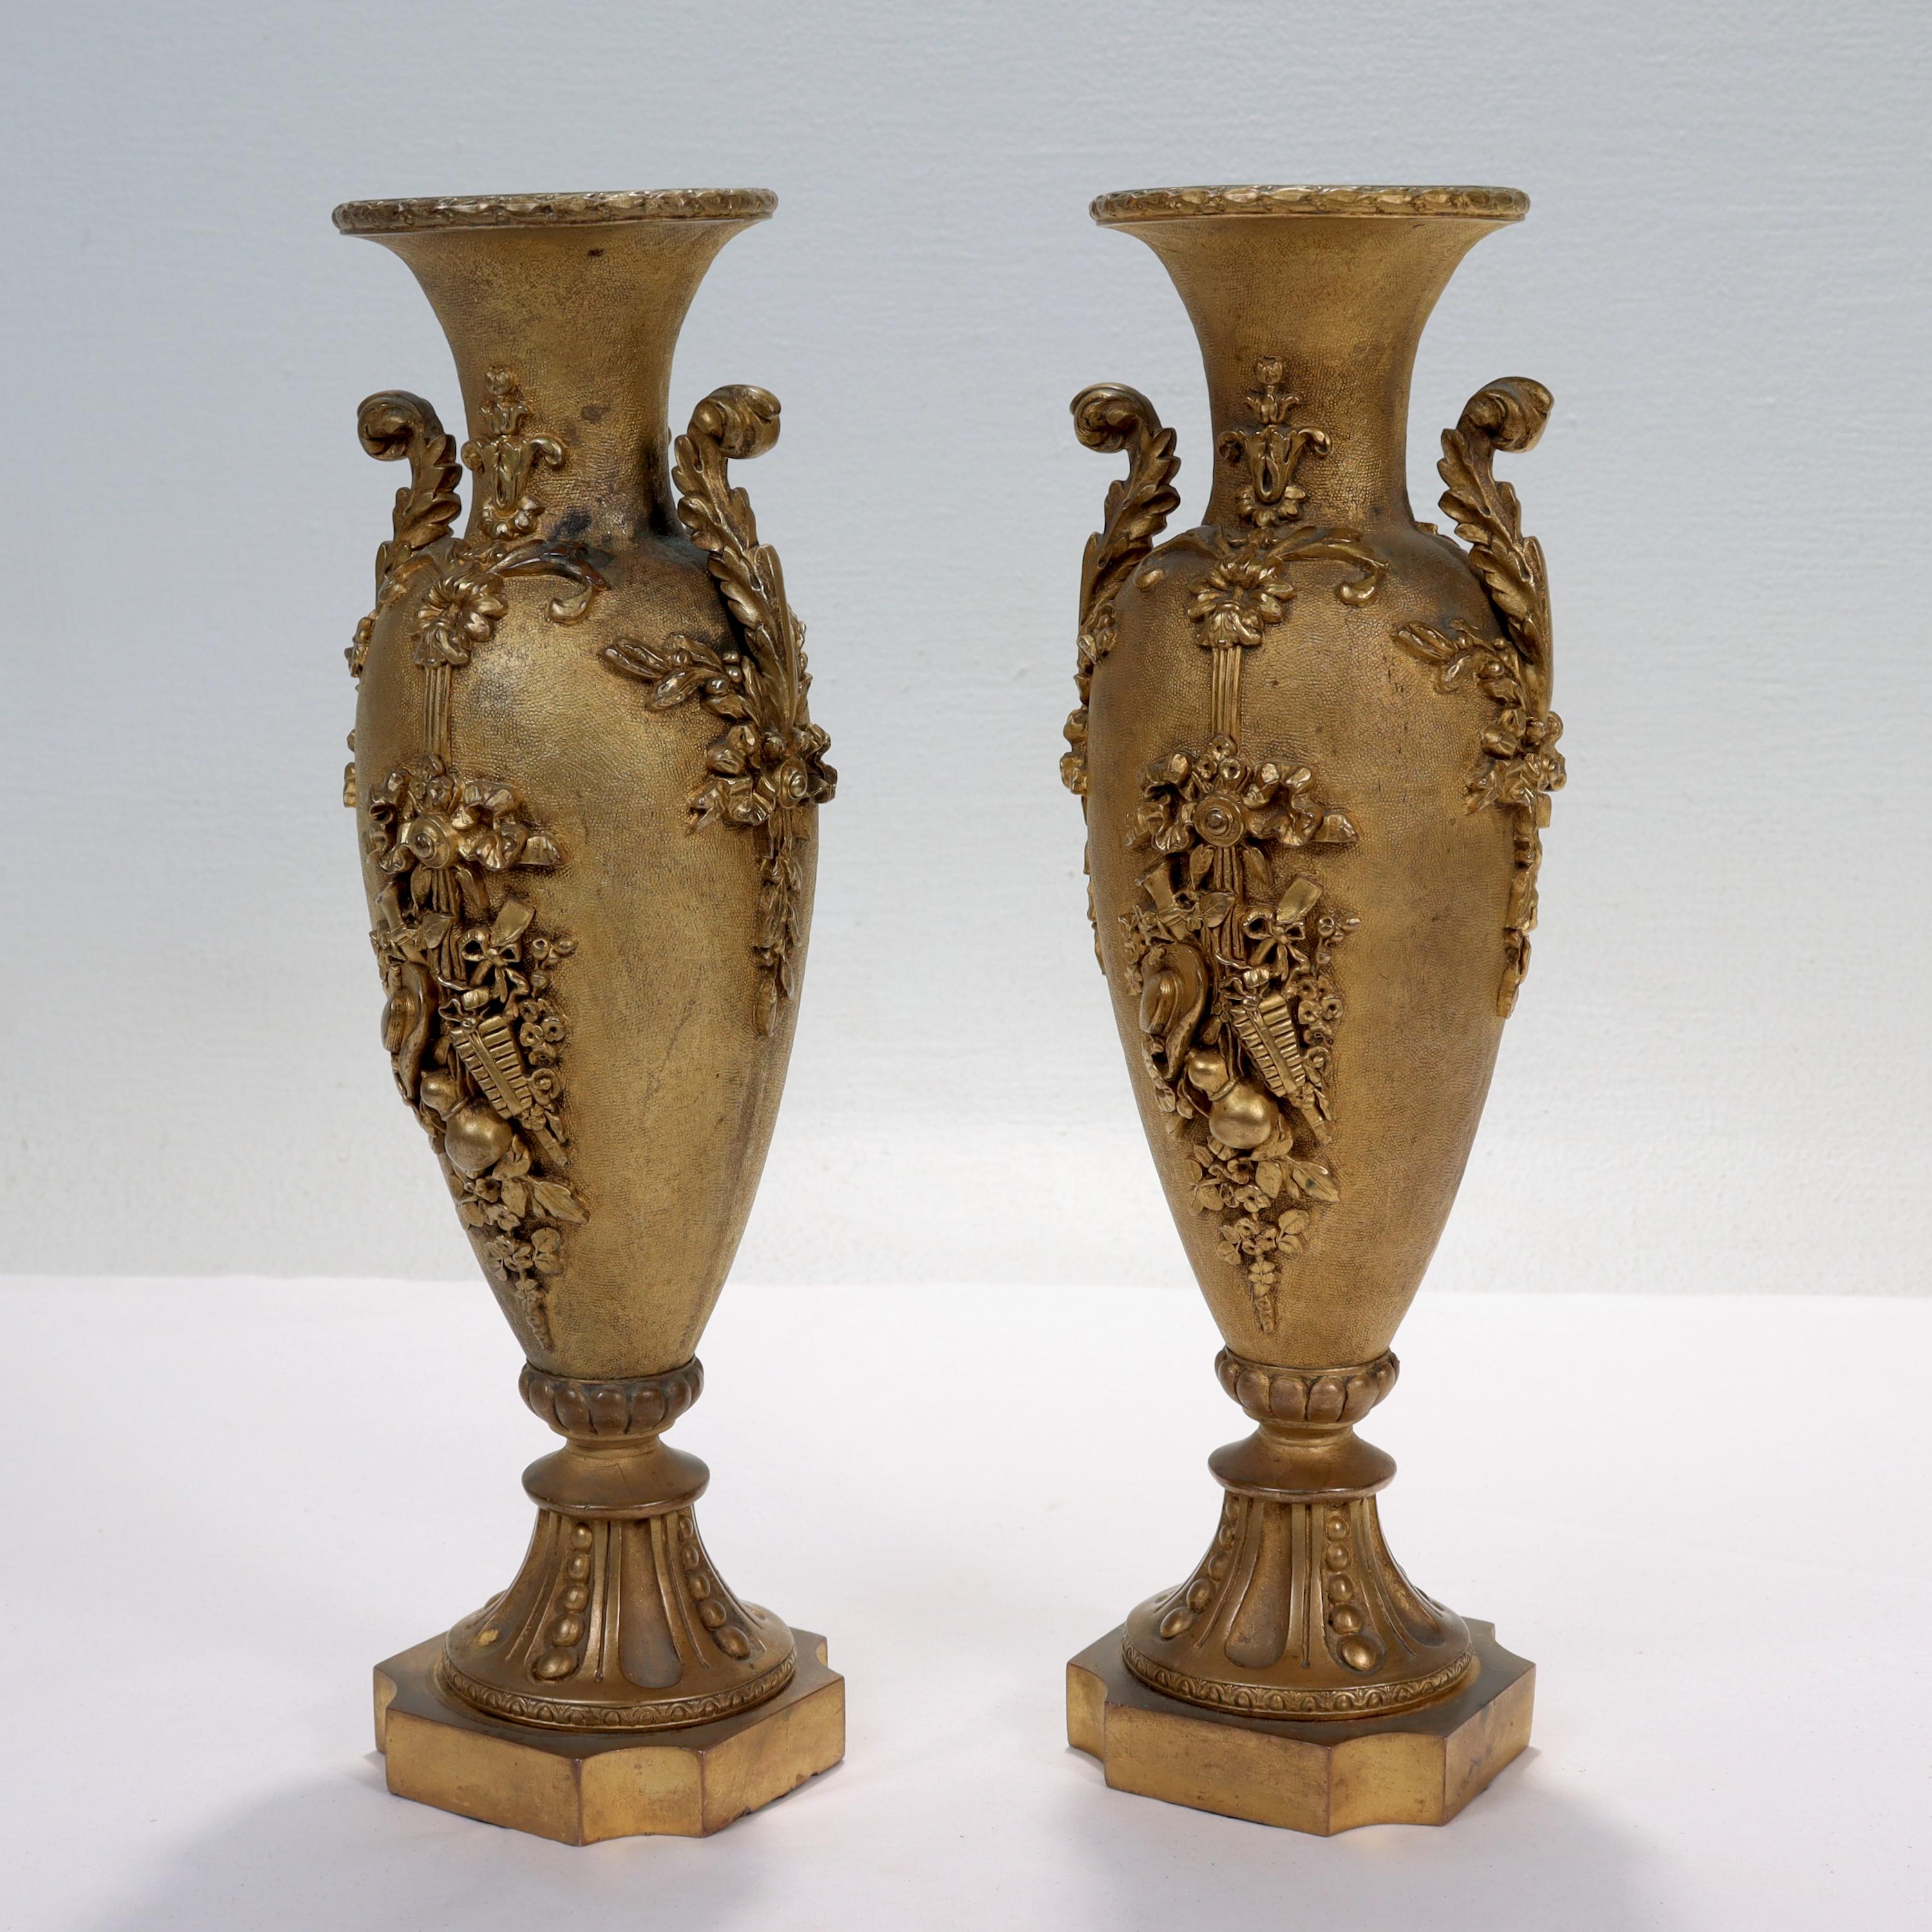 Antique Second Empire French Doré Gilt Bronze Vases or Urns For Sale 1